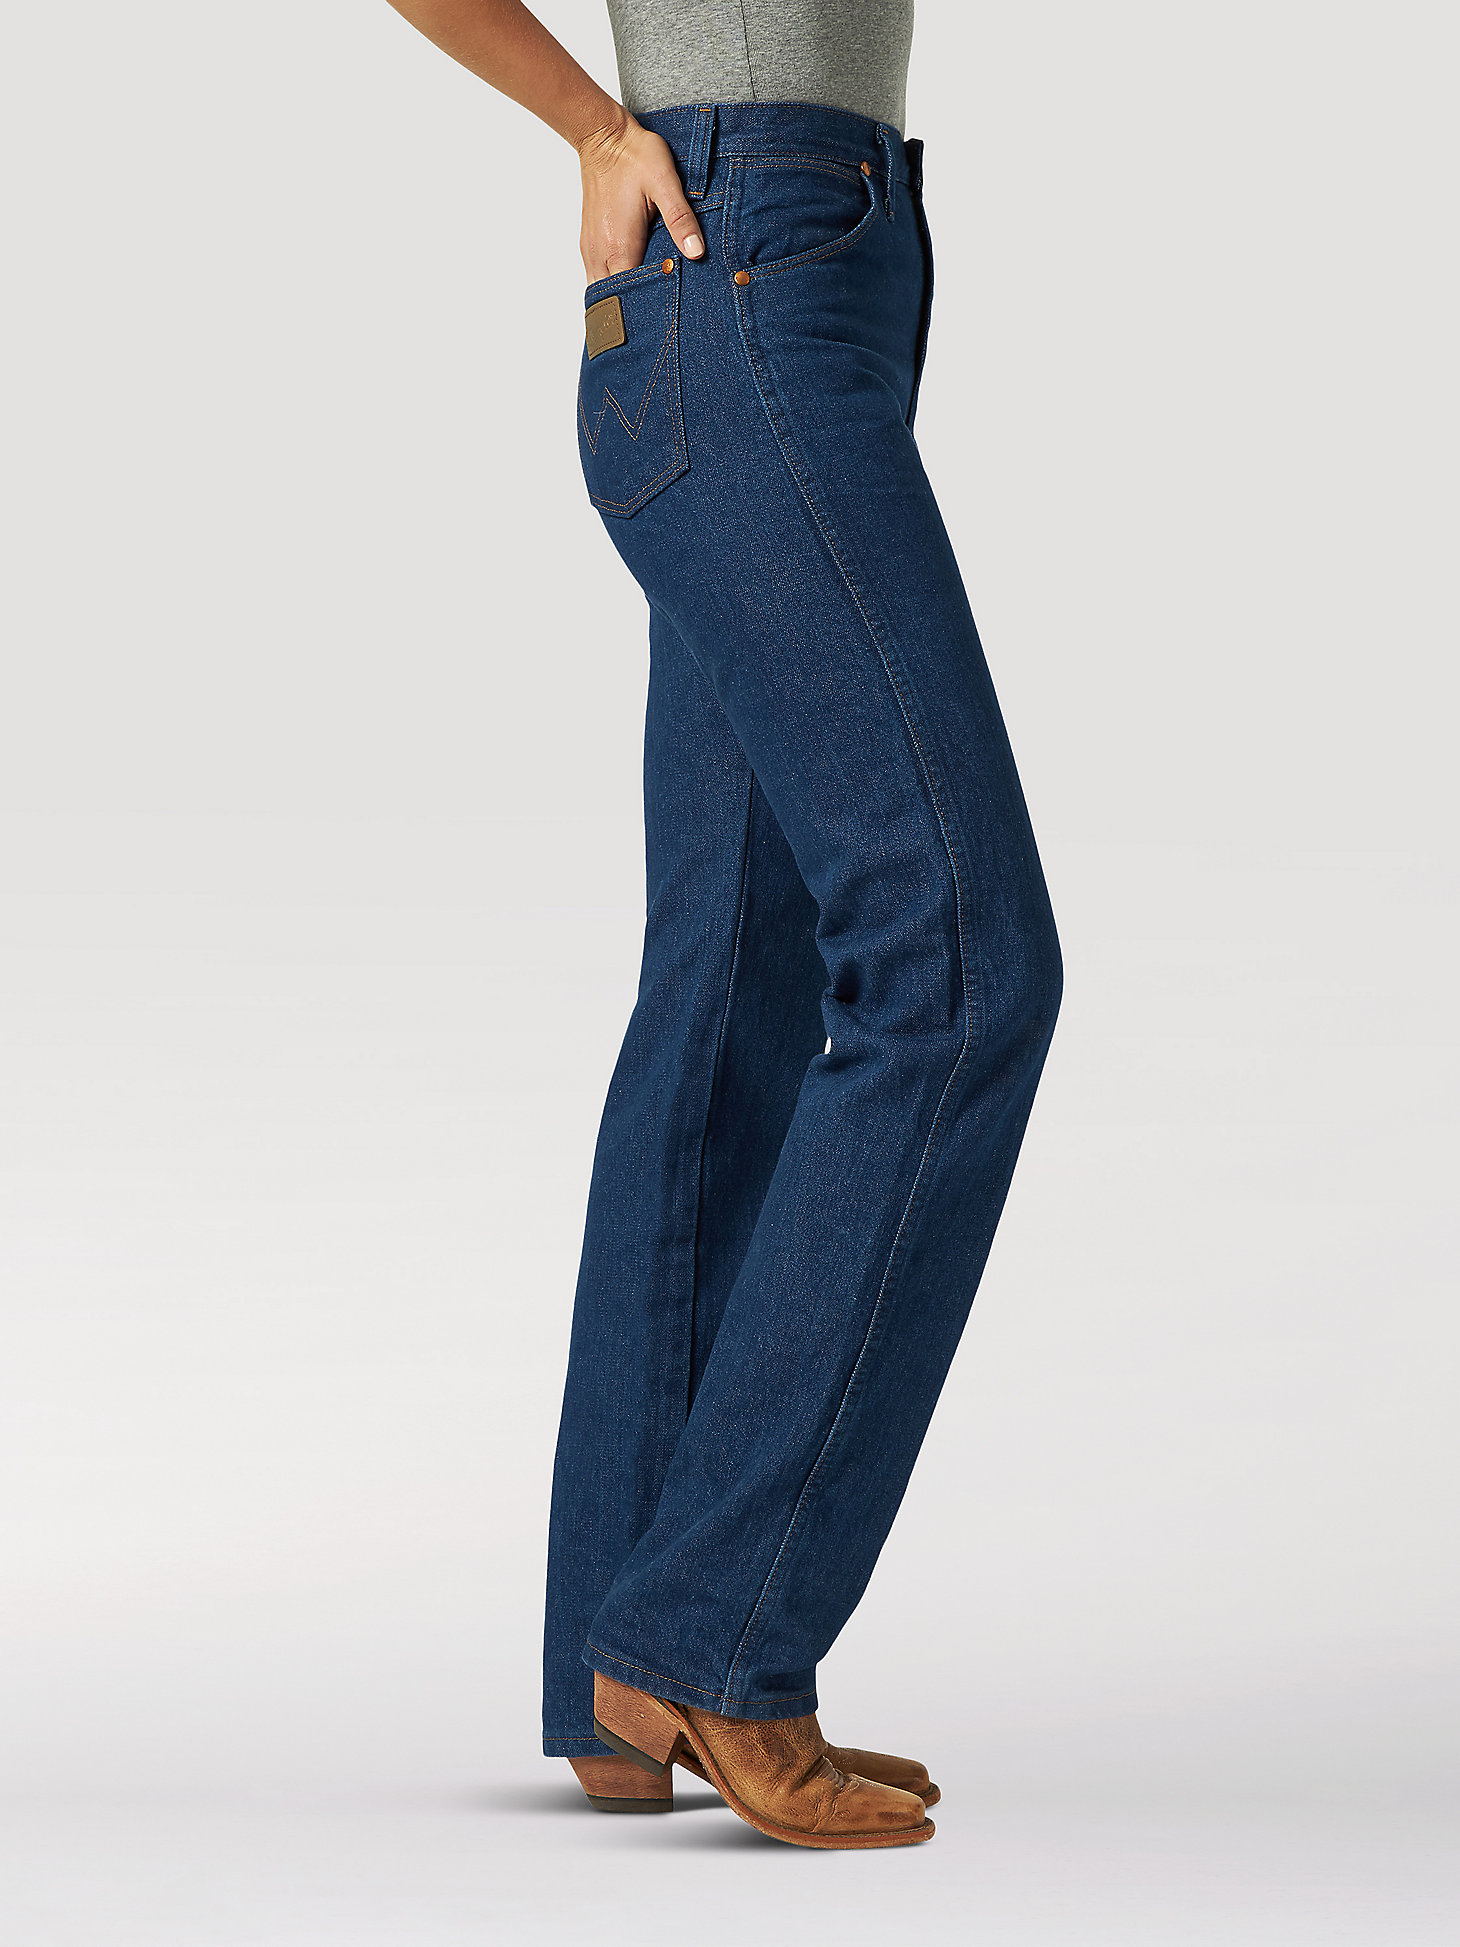 Women's Wrangler® Cowboy Cut® Slim Fit Jean in Prewashed Indigo alternative view 4